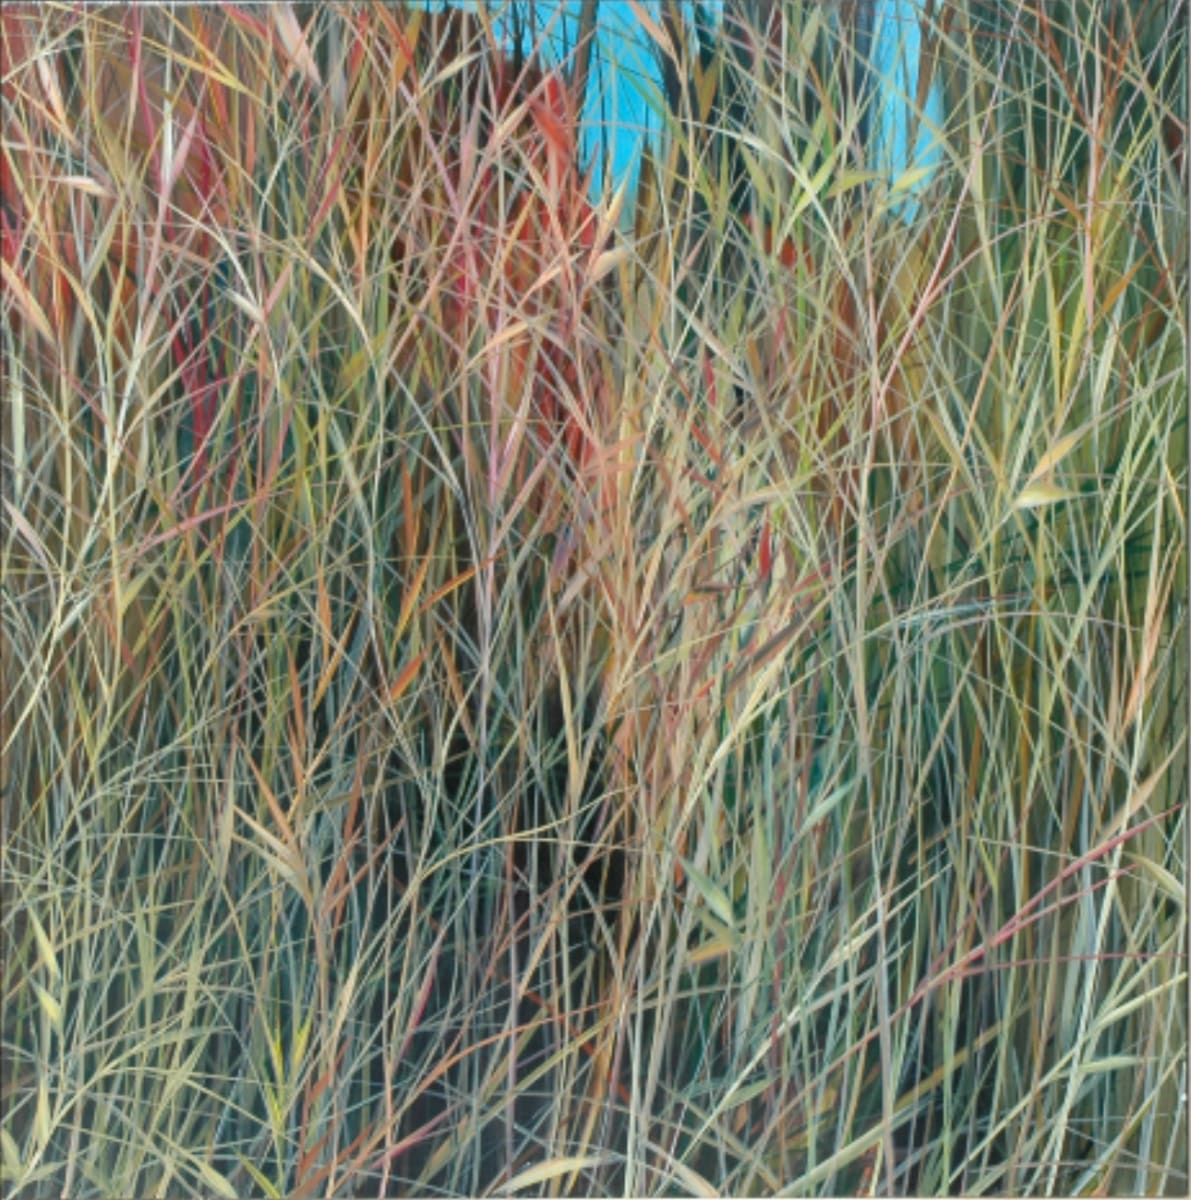 Grasses Series by Charlie Burk 